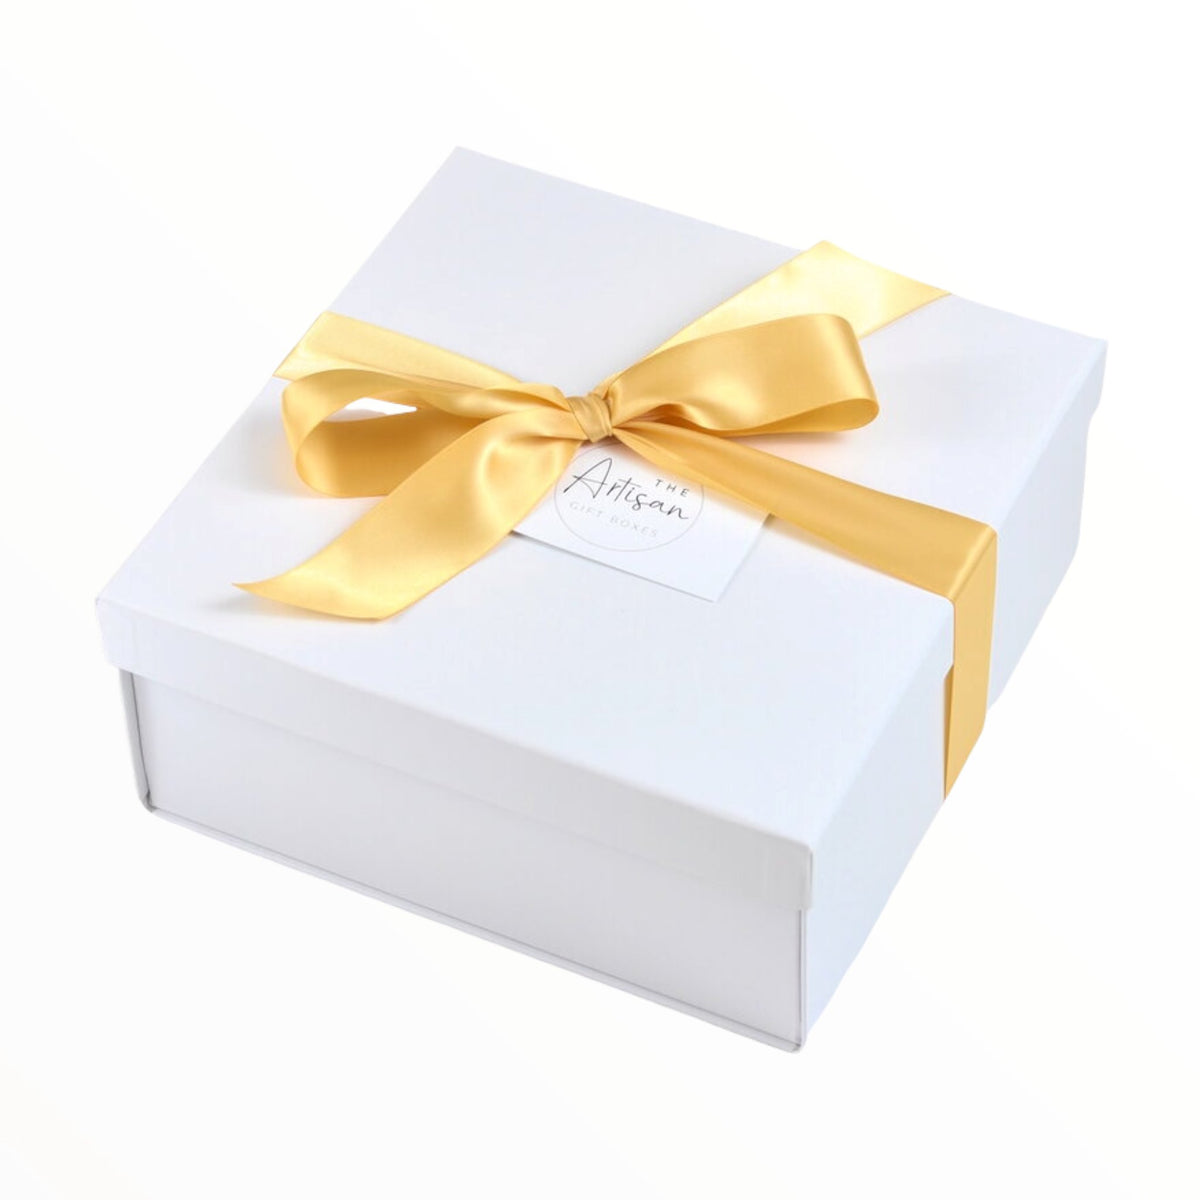 Texas Longhorn Gift The Artisan Gift Boxes 